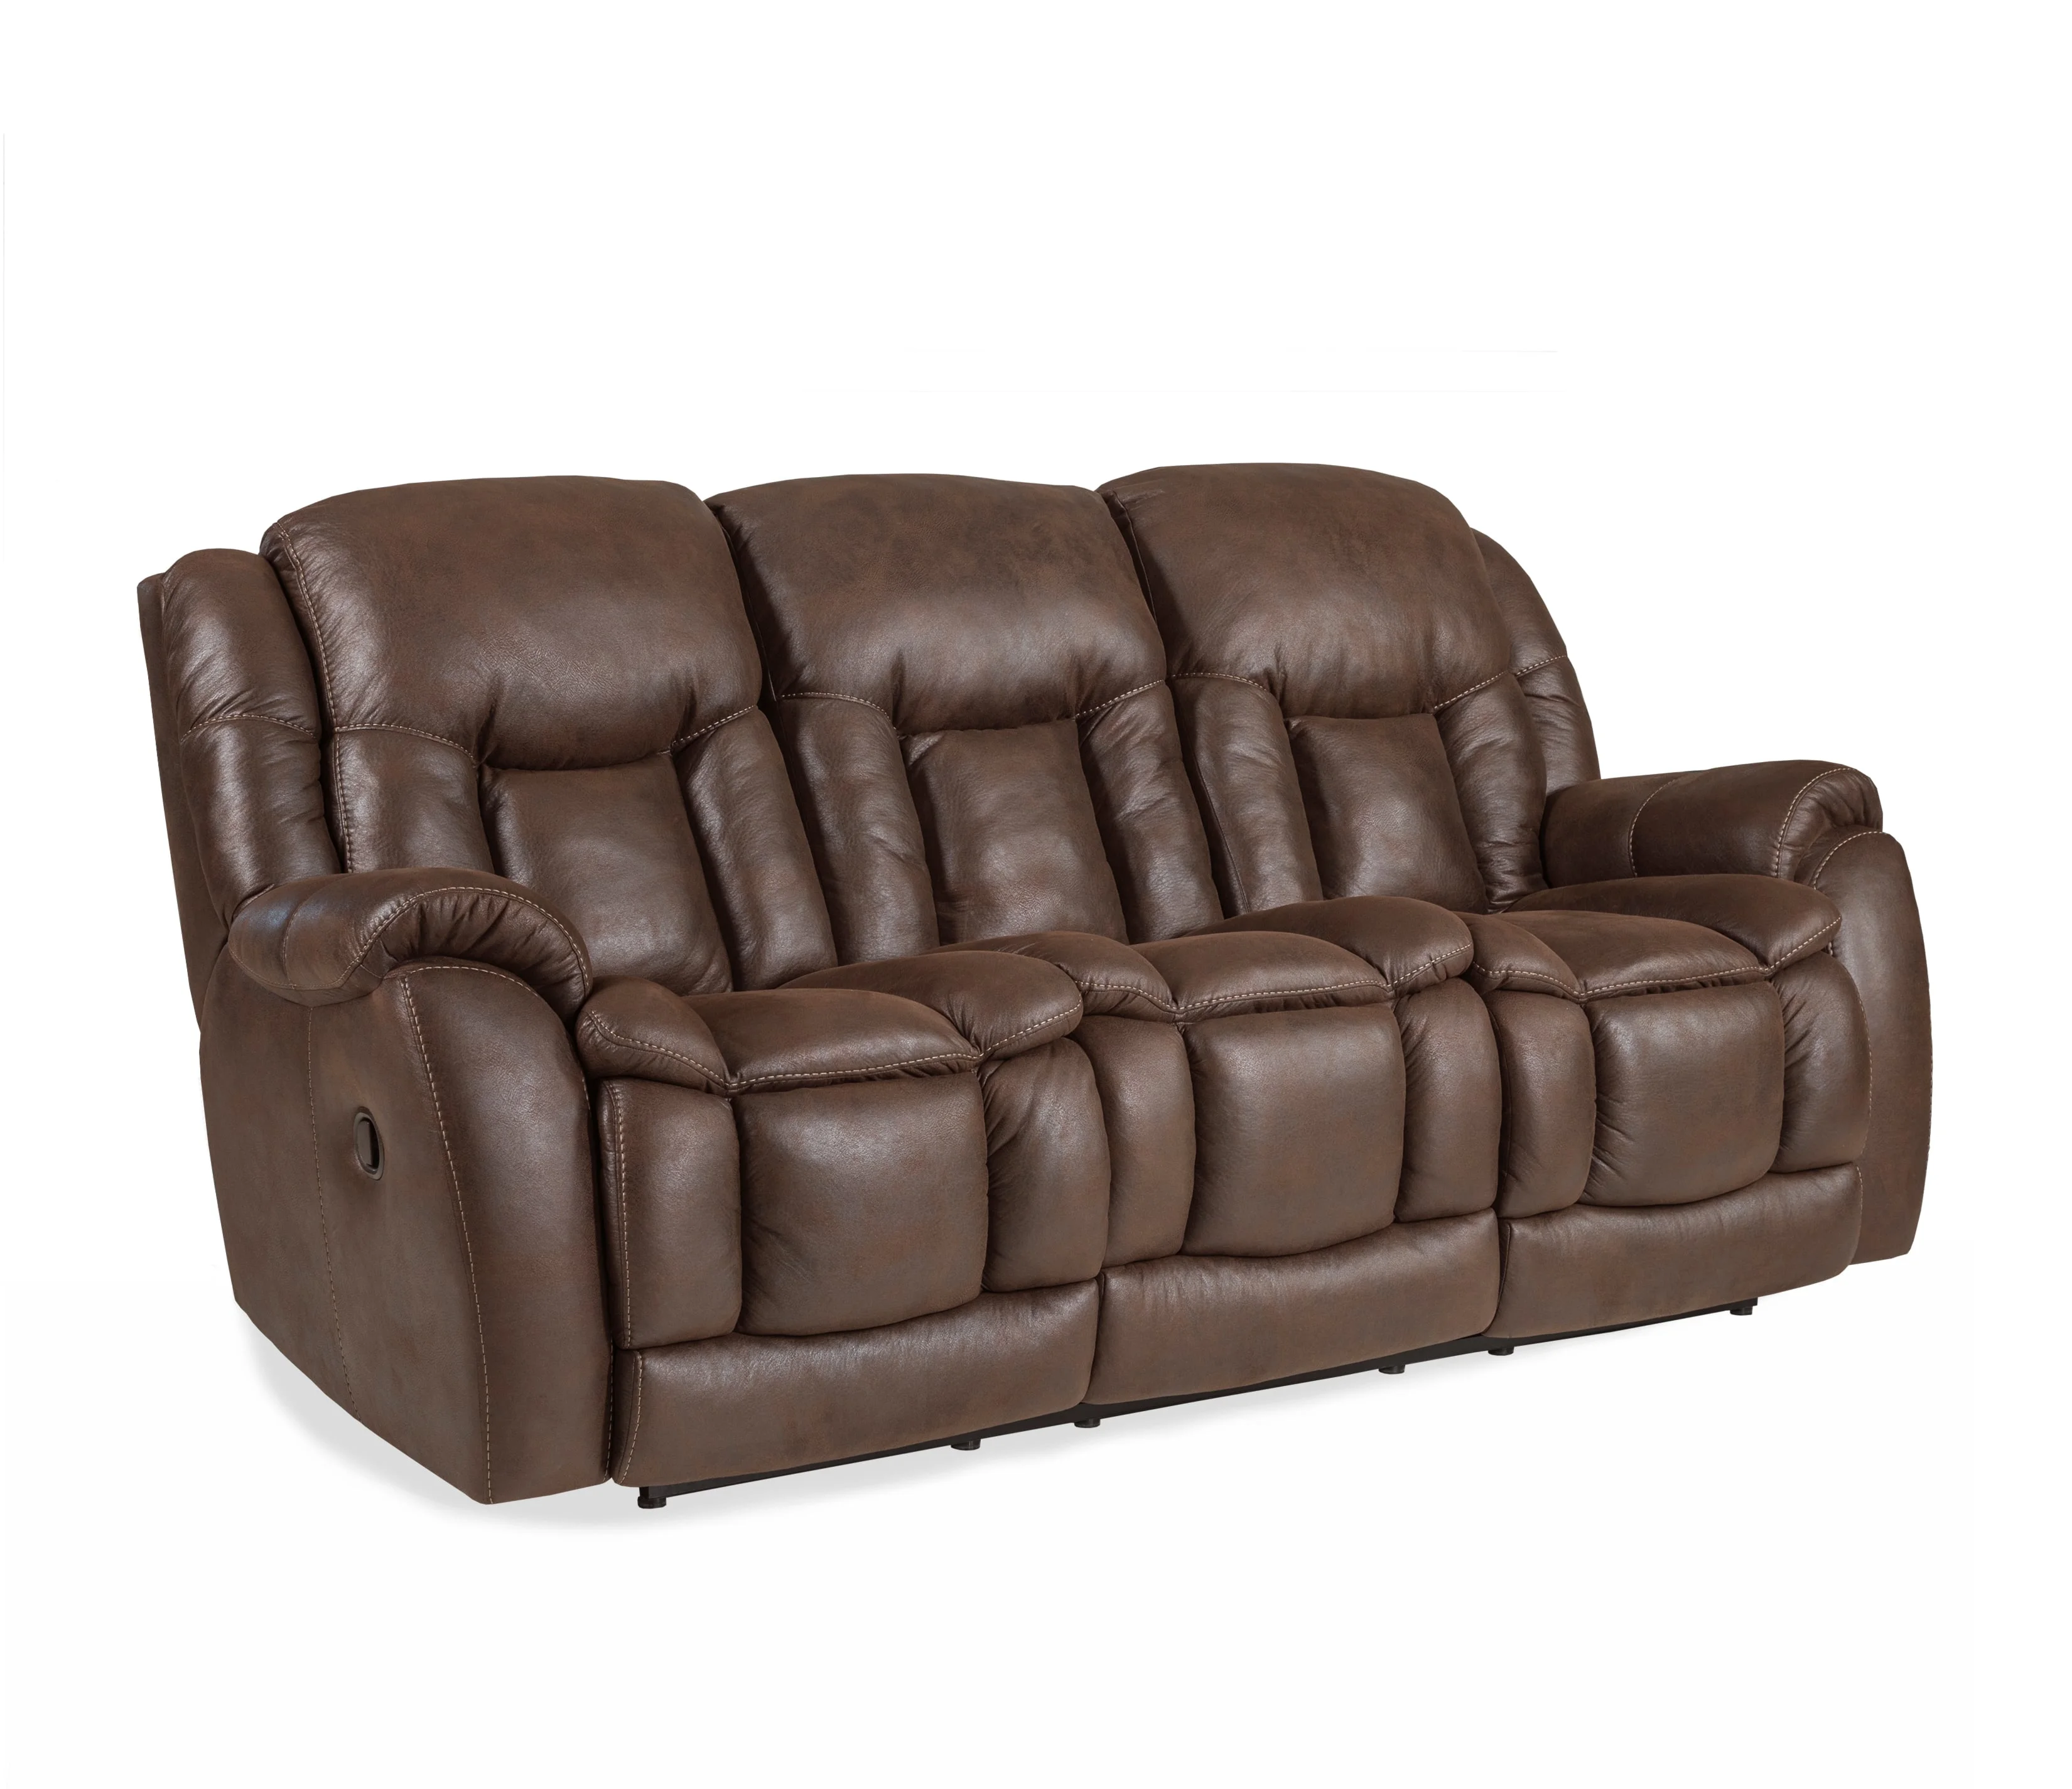 Homestretch 209 209 30 21 Casual Double Reclining Sofa Standard Furniture Reclining Sofa